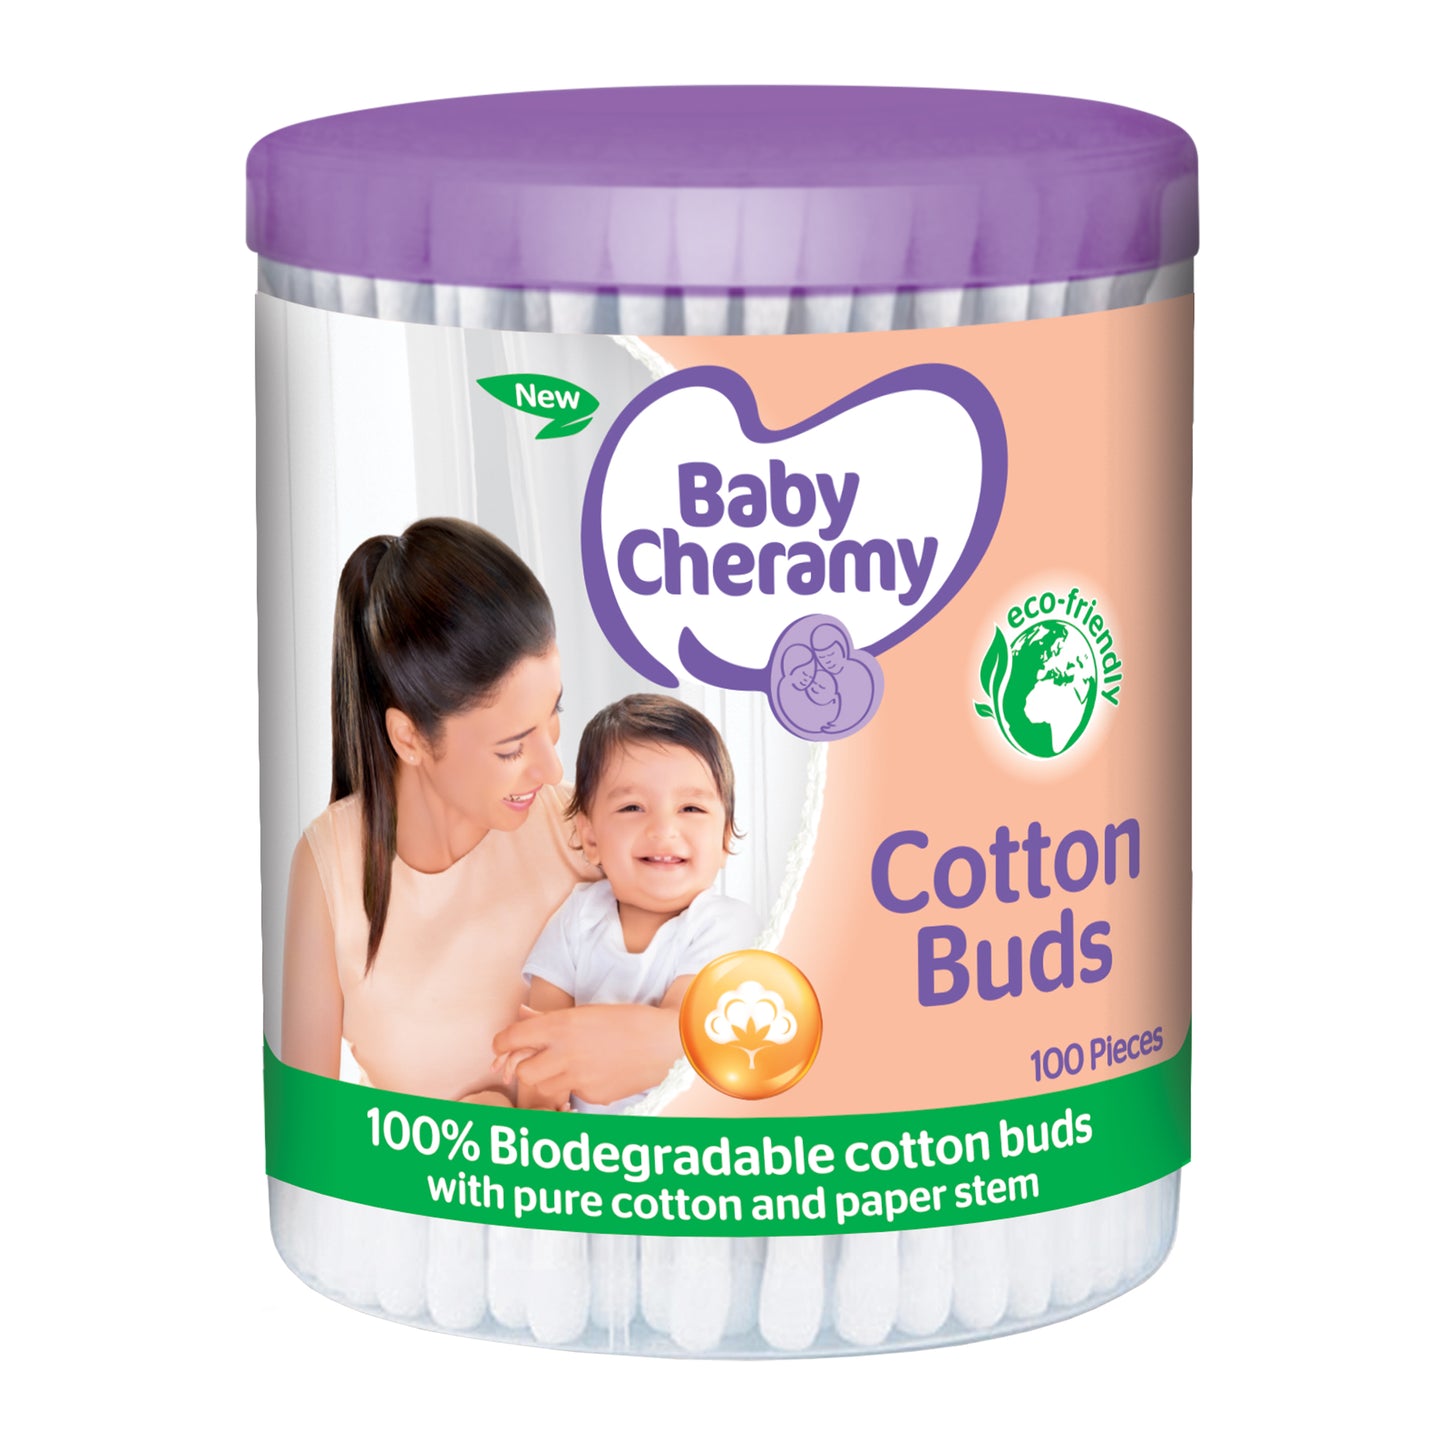 Baby Cheramy Bamboo Cotton Buds (100 Pieces)